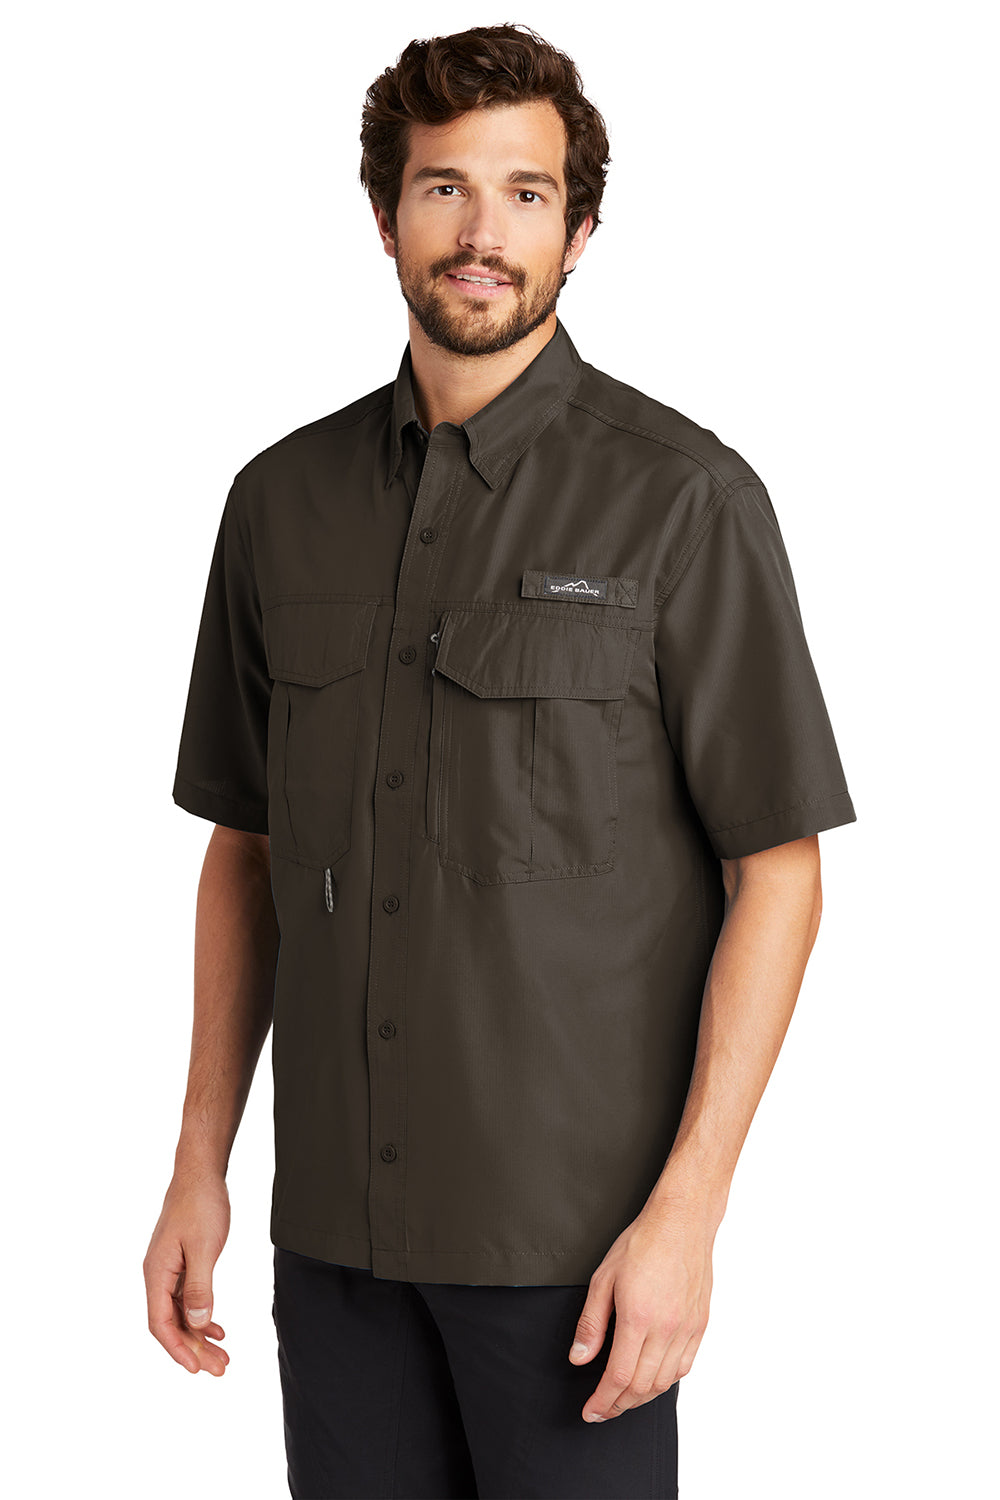 Burnside Men's Long Sleeve Utility Fishing Shirt, Sizes M-2XL